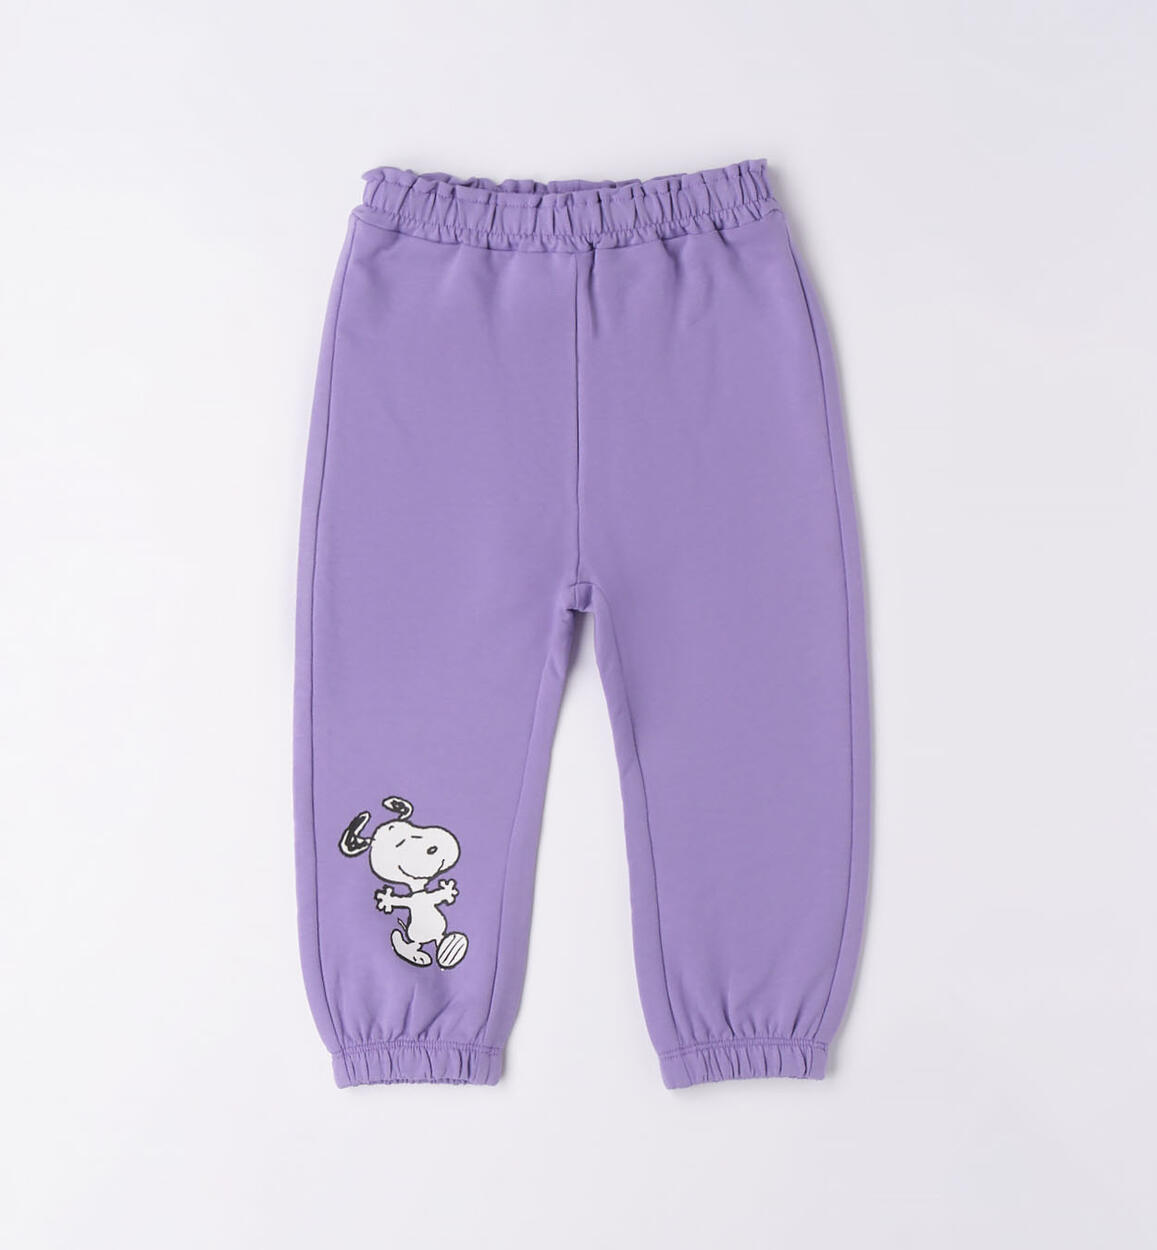 Pantalone lungo bambina Snoopy VIOLA Sarabanda